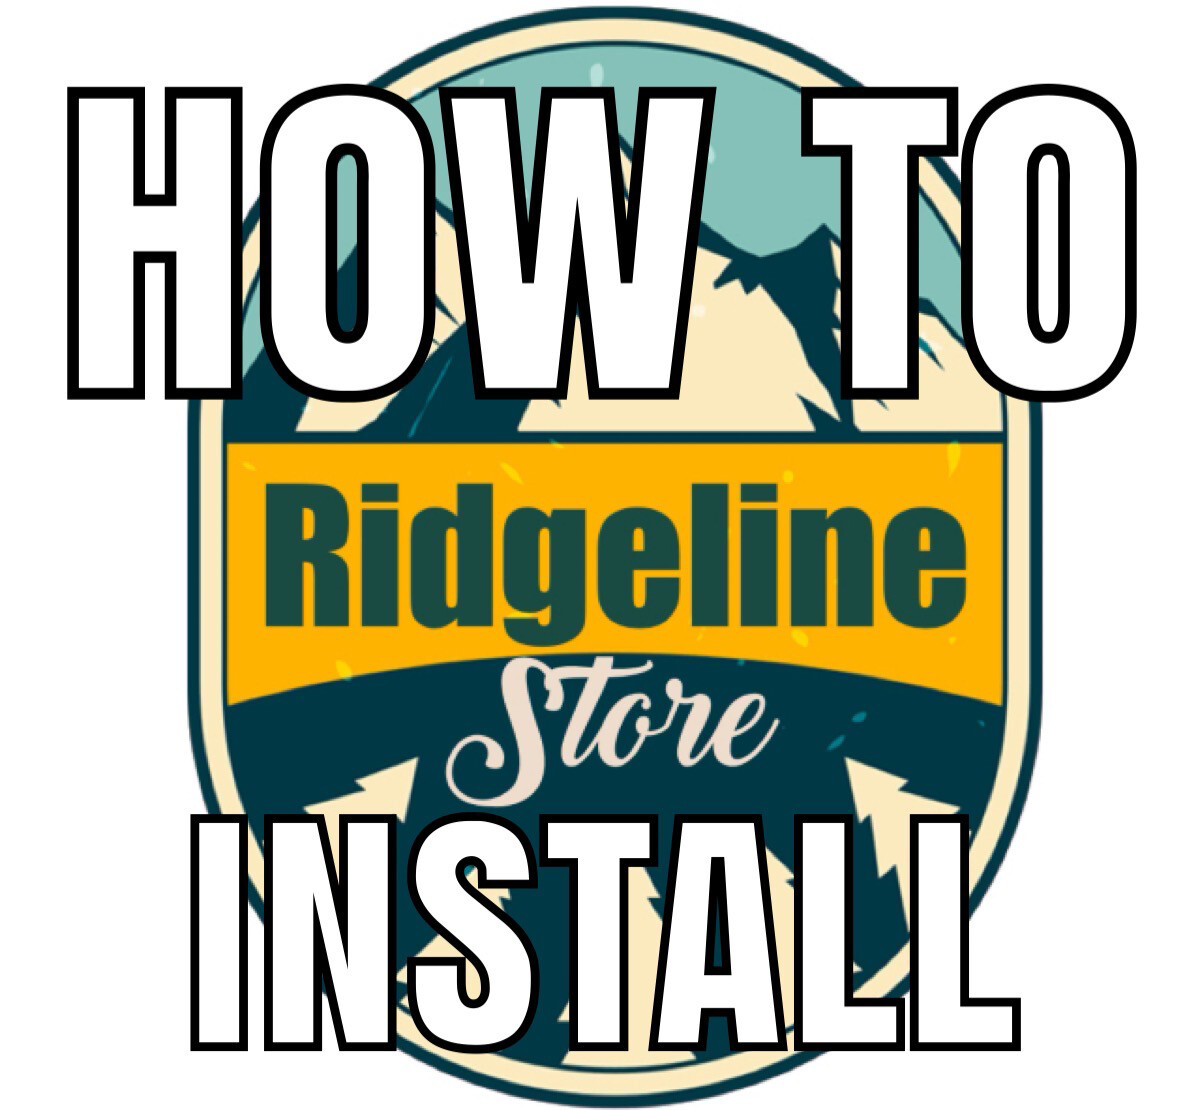 How To Install The Honda Ridgeline Roof Rack